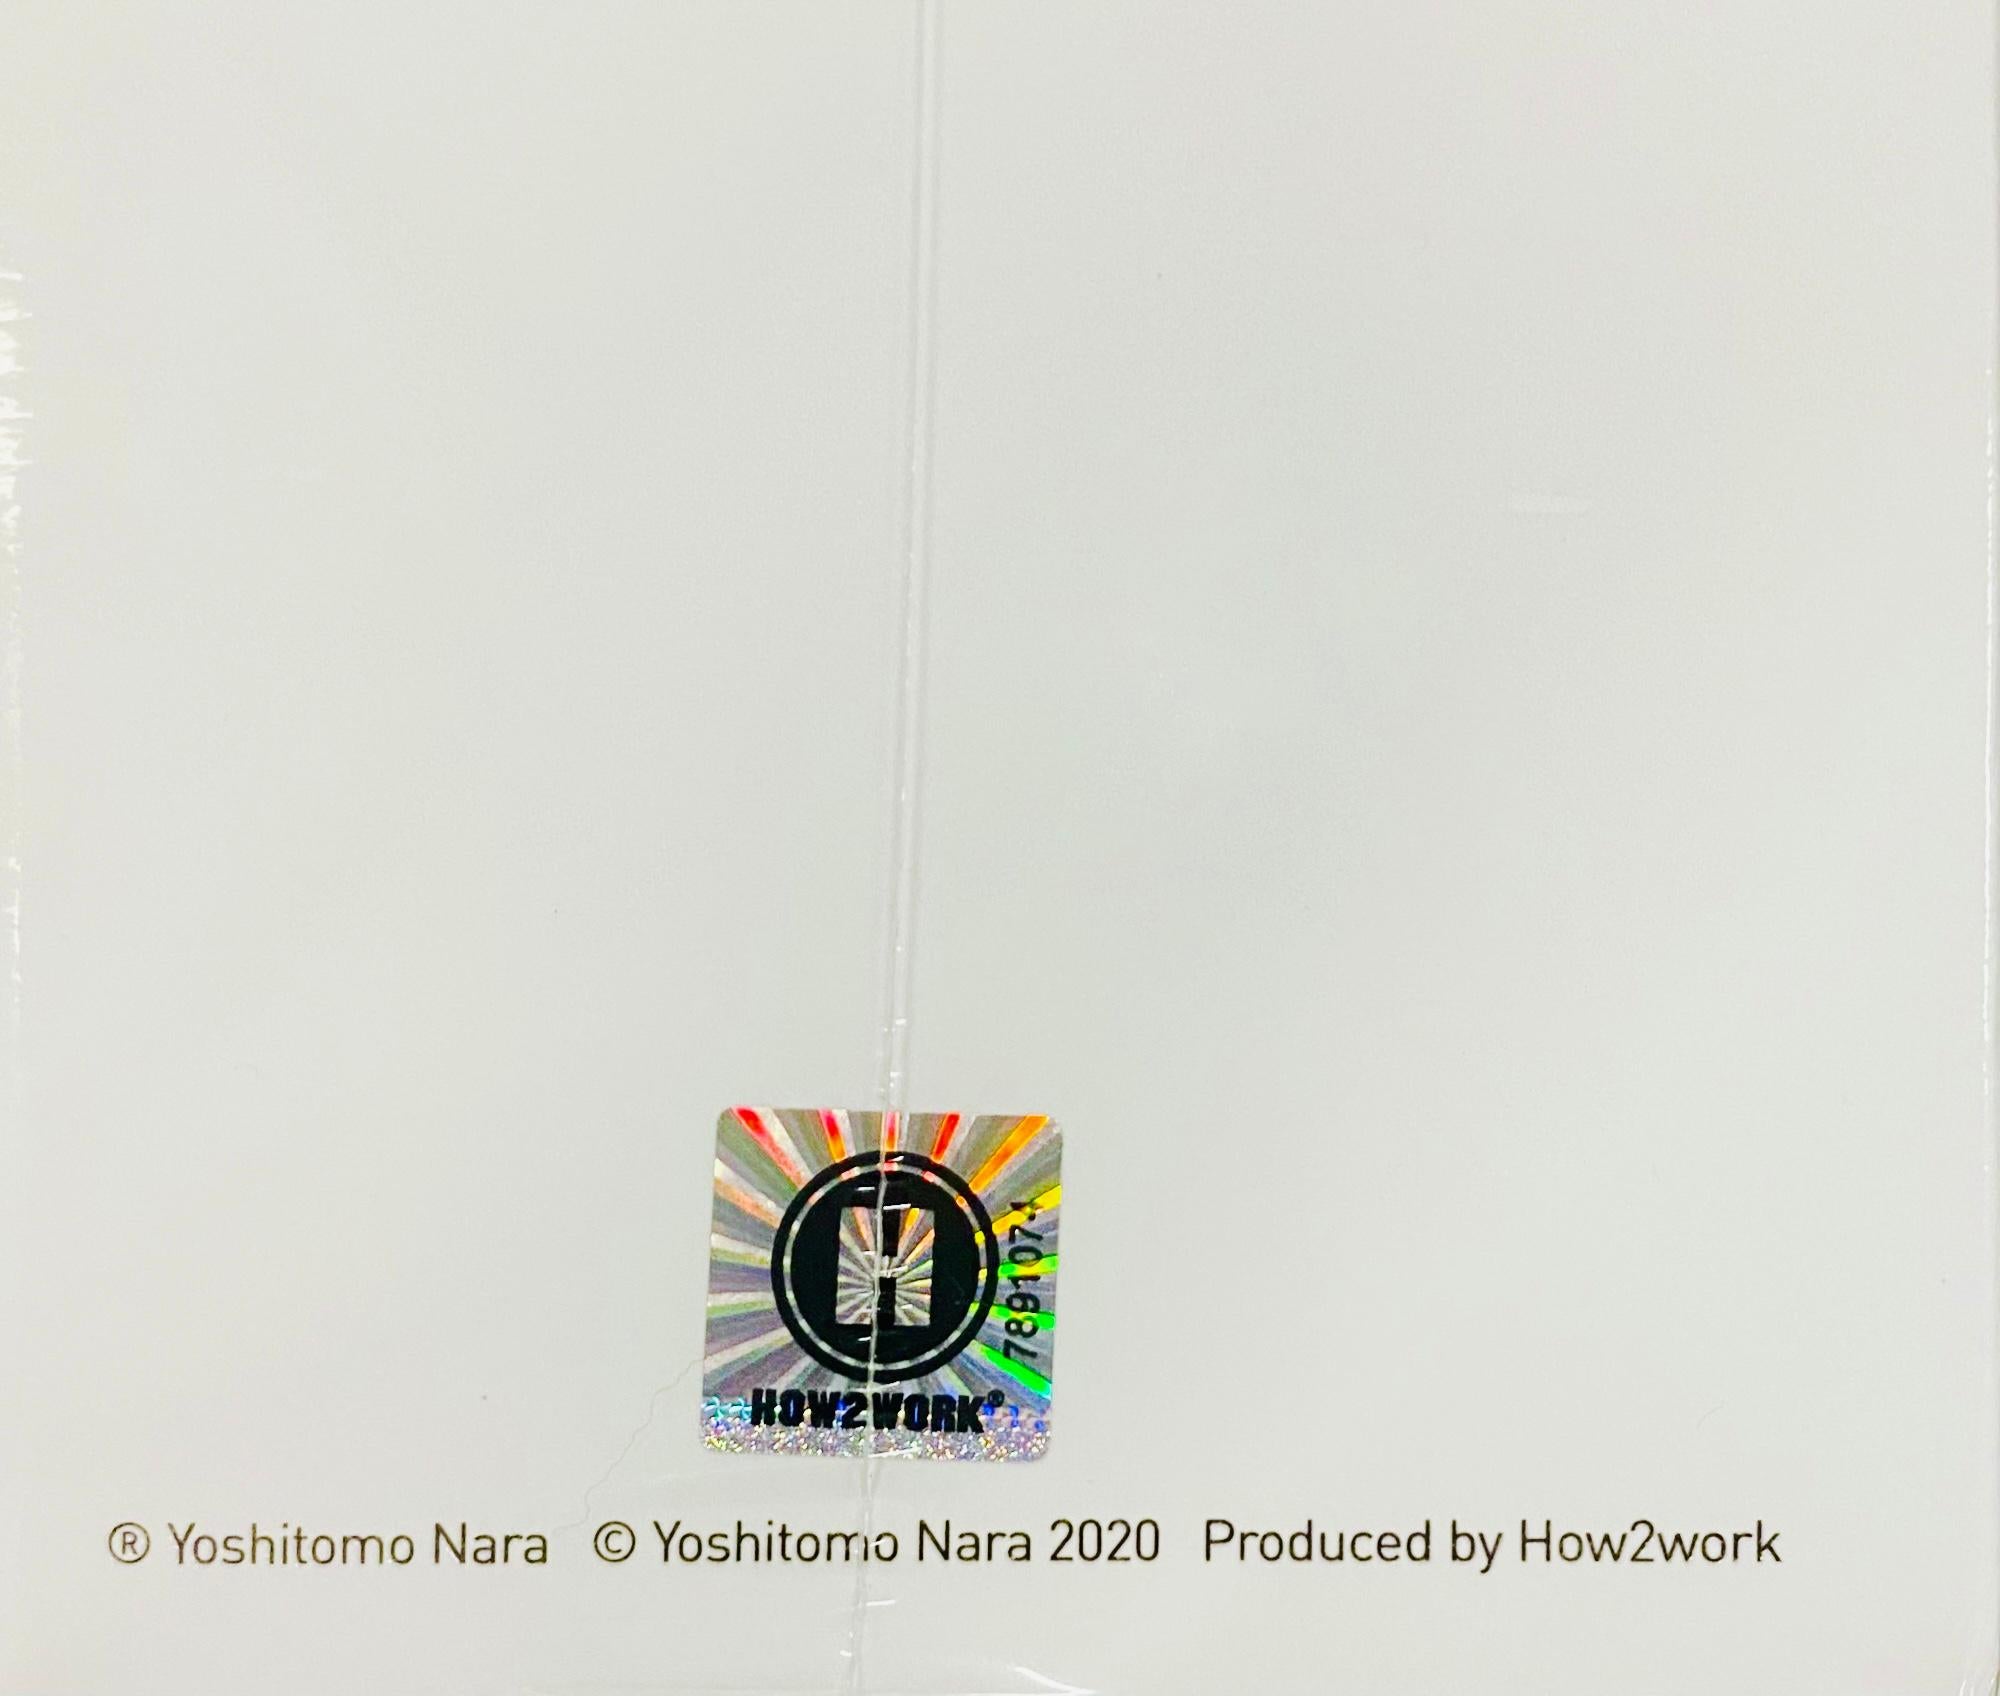 Yoshitomo Nara 123 Drummer Girls:
Complete Set of 3 Yoshitomo Nara designed art toys inspired by Nara's Drum girl motif. The set is new and sealed in 3 individual original factory boxes.

Medium: Complete Set of 3 vinyl figures. Year: 2020.